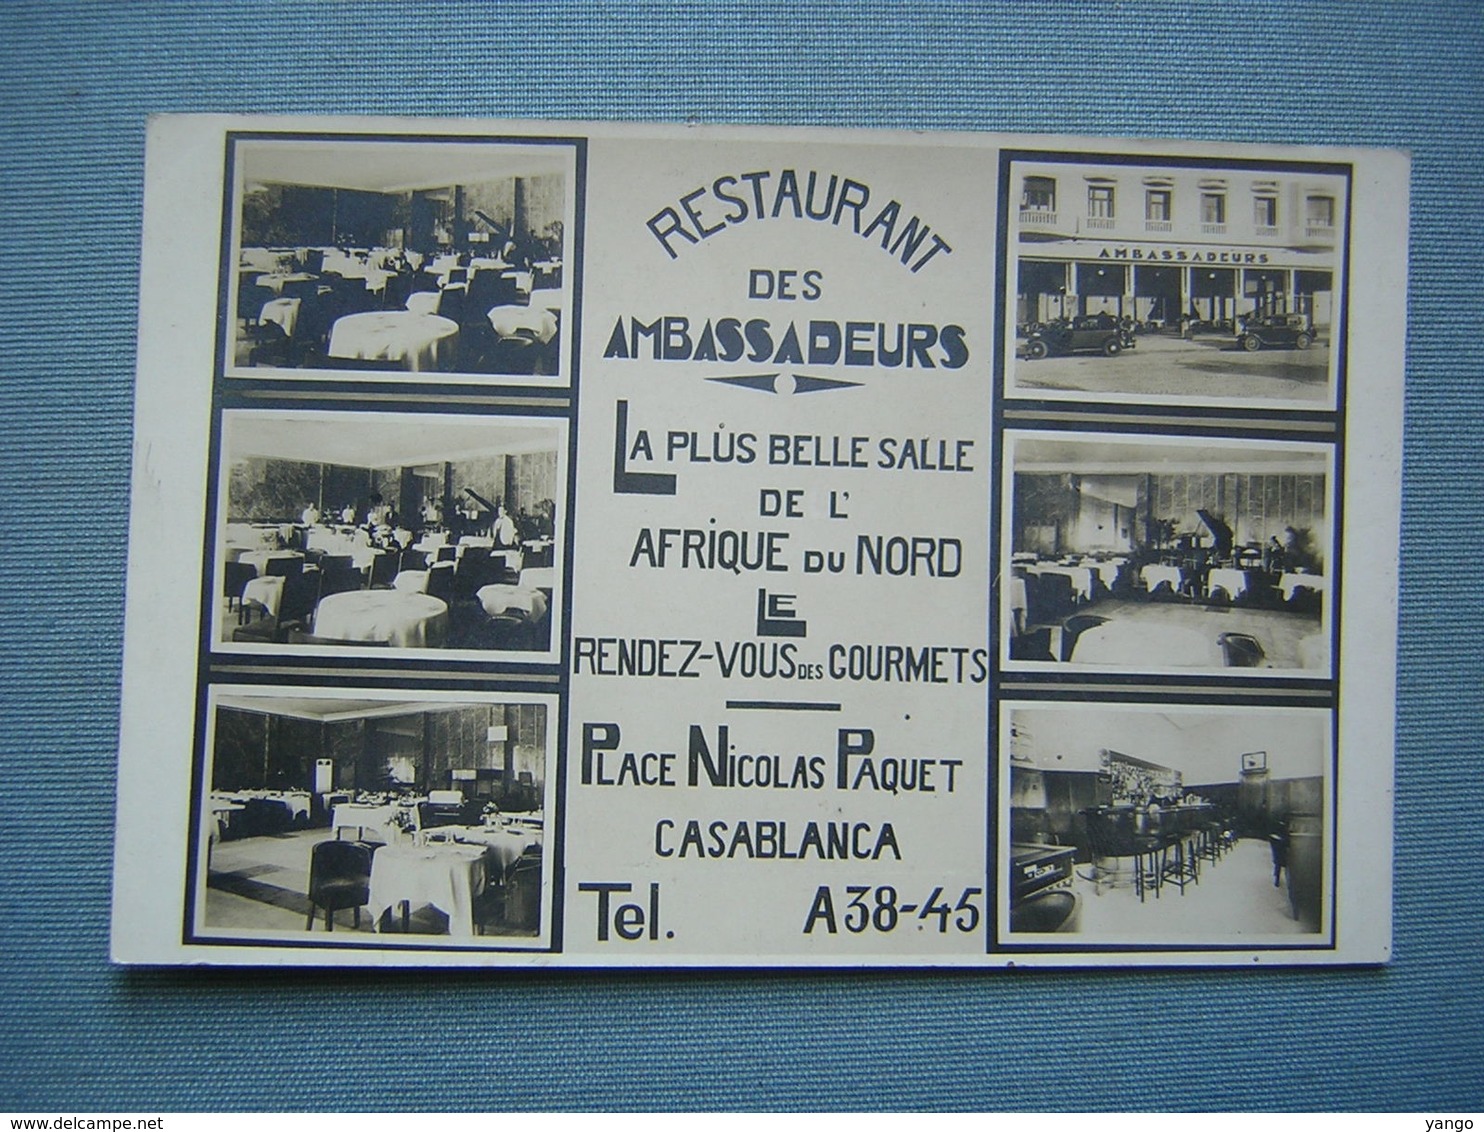 CASABLANCA - RESTAURANT DES AMBASSADEURS - PLACE NICOLAS PAQUET - Casablanca